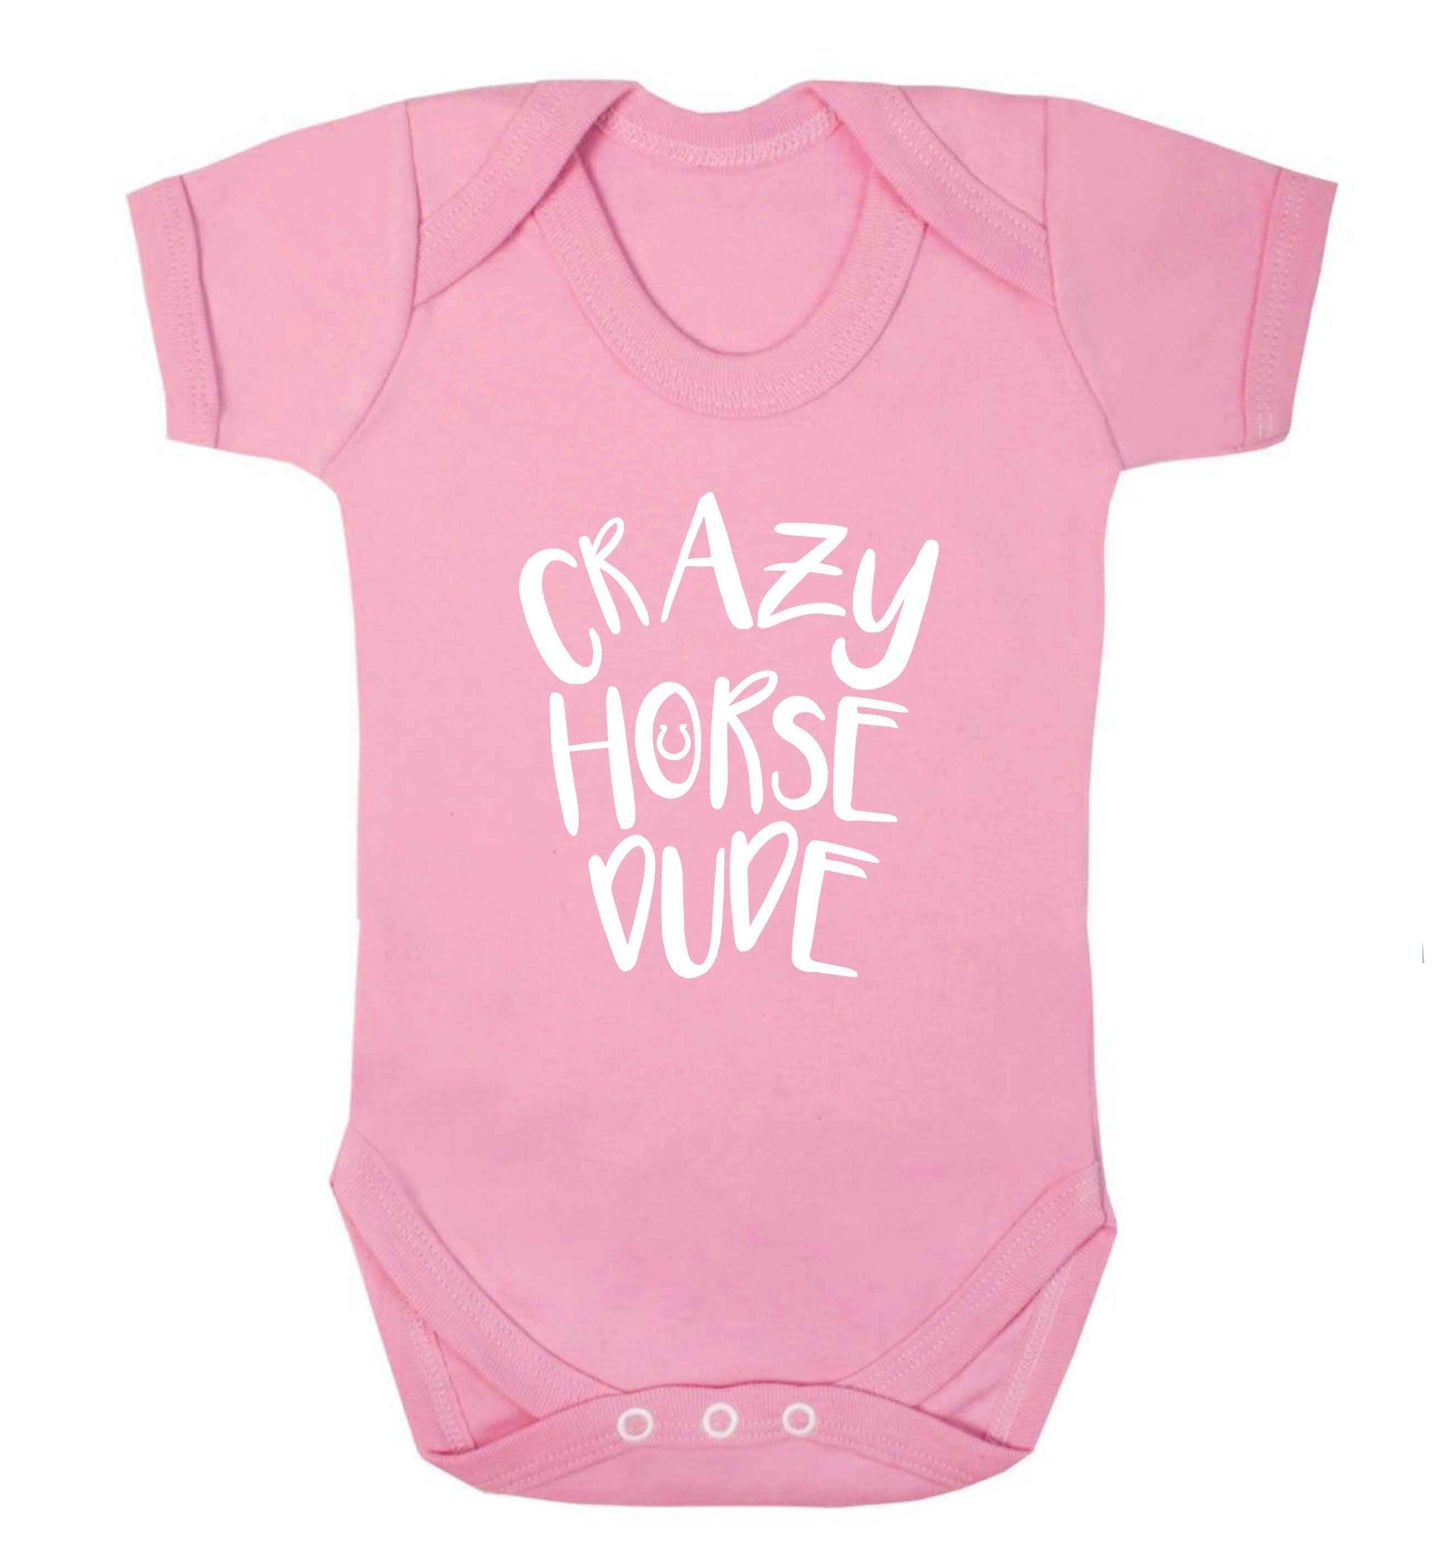 Crazy horse dude baby vest pale pink 18-24 months